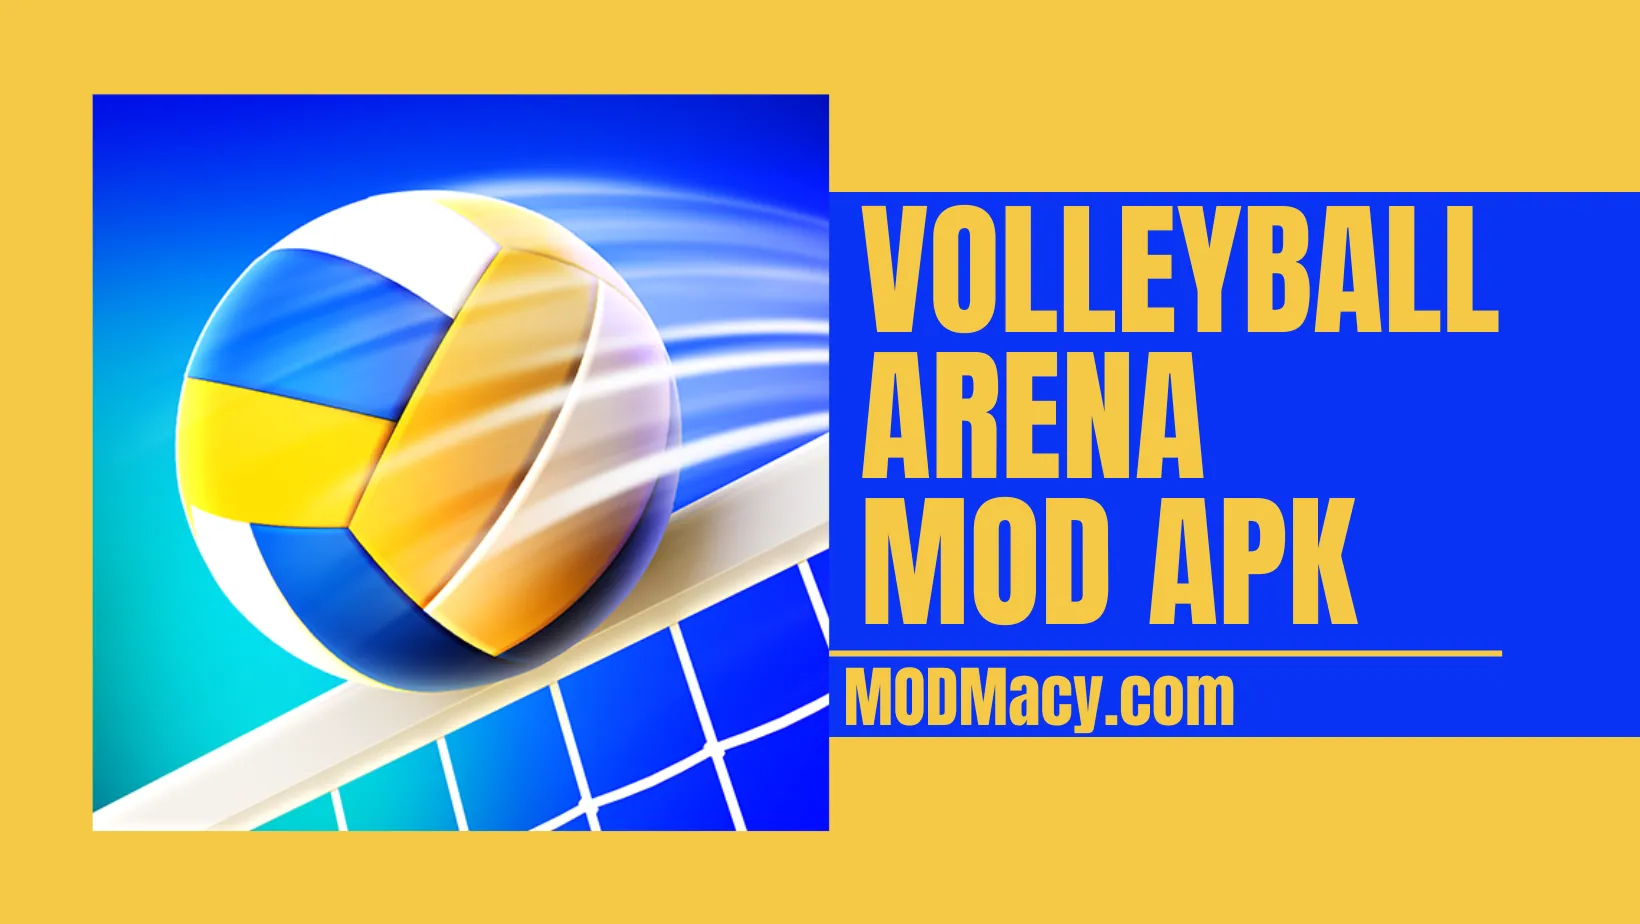 Volleyball Arena MOD APK.webp